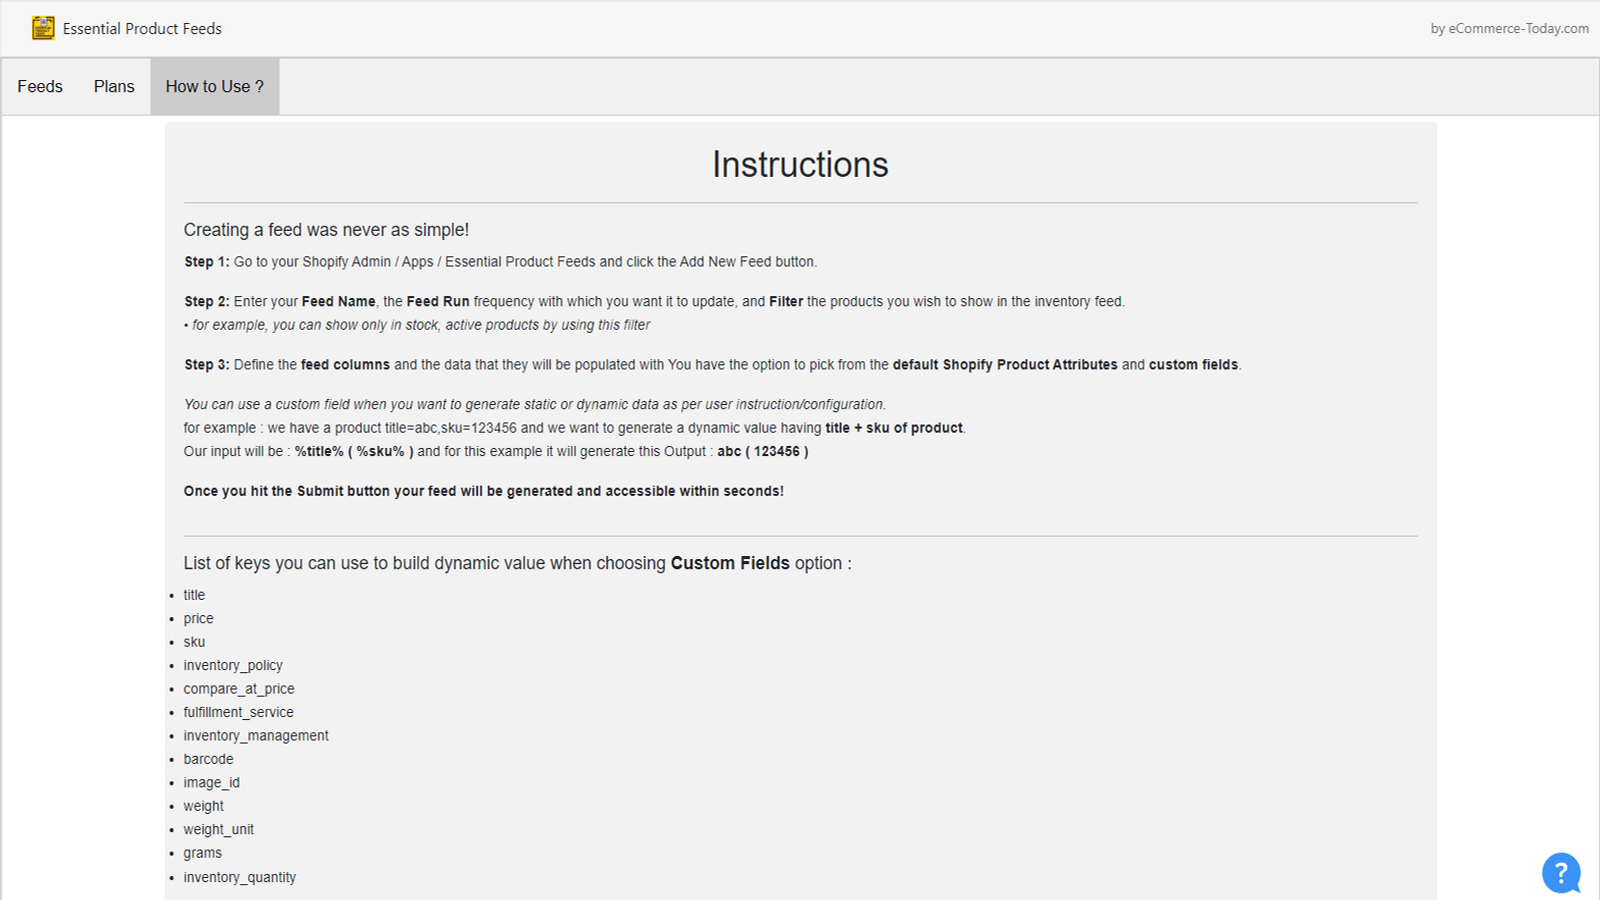 App Instructions